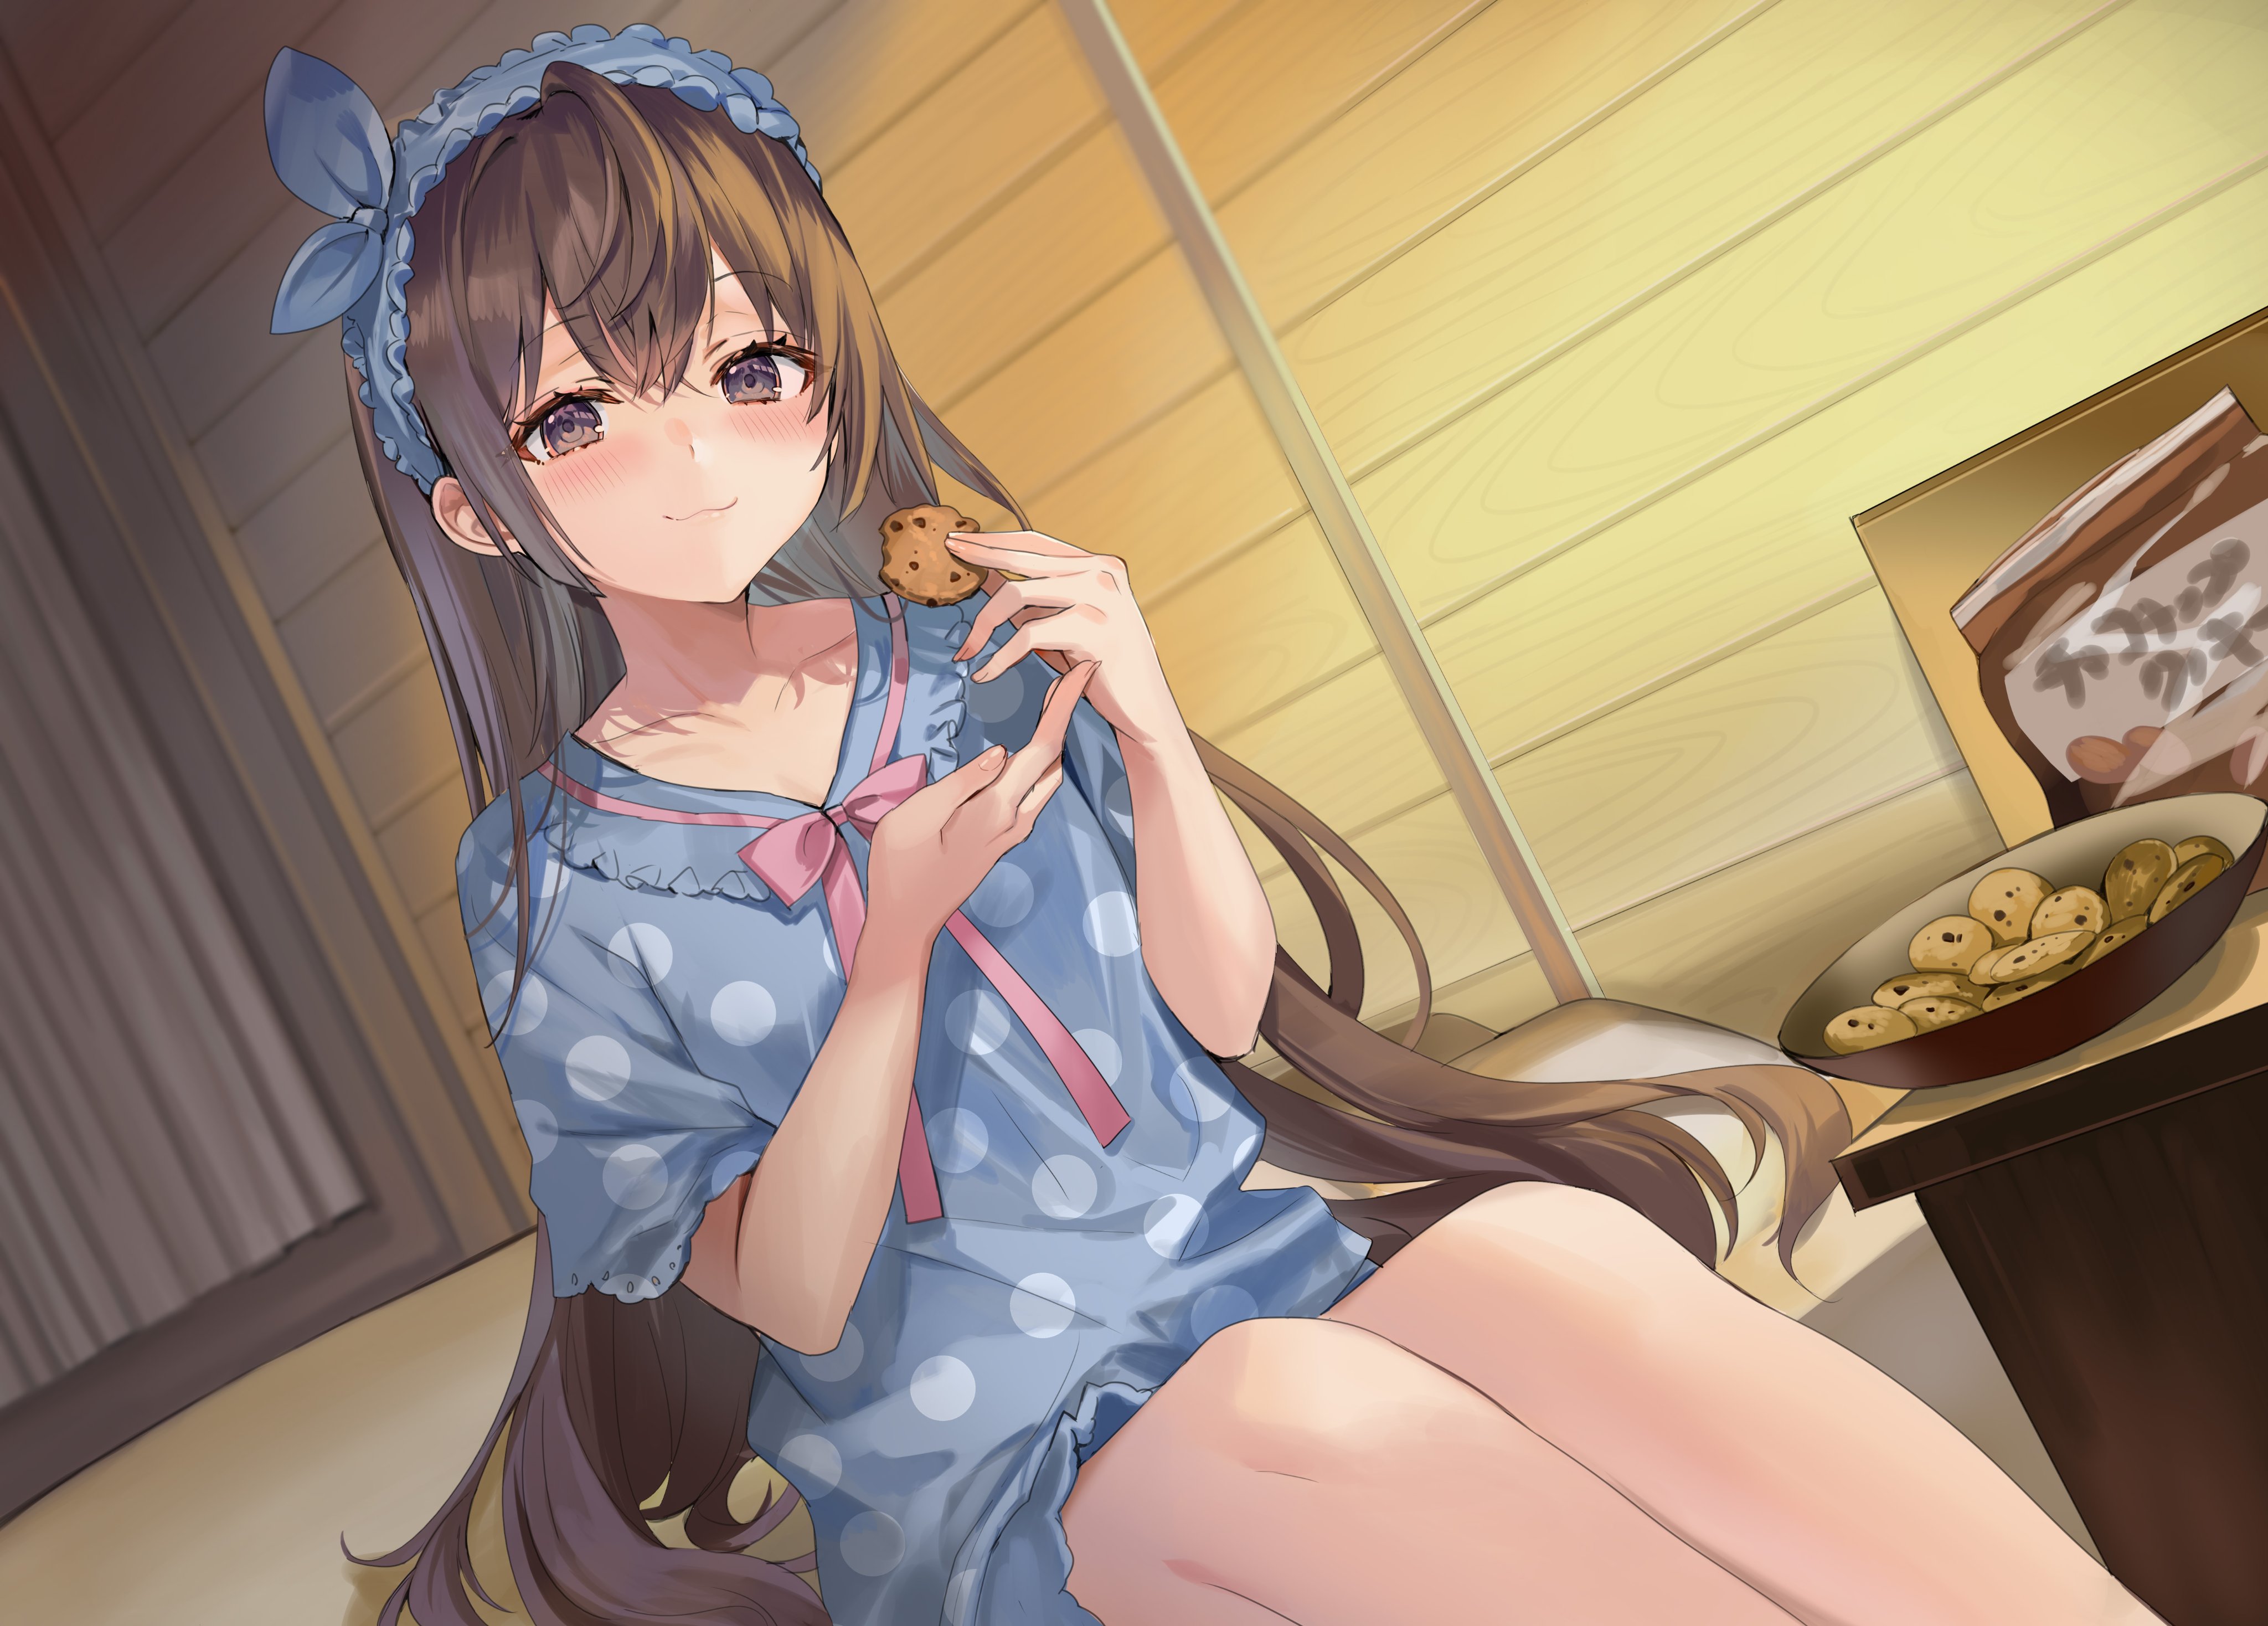 Anime 4096x2936 anime anime girls cookies sweets eating purple eyes long hair brunette